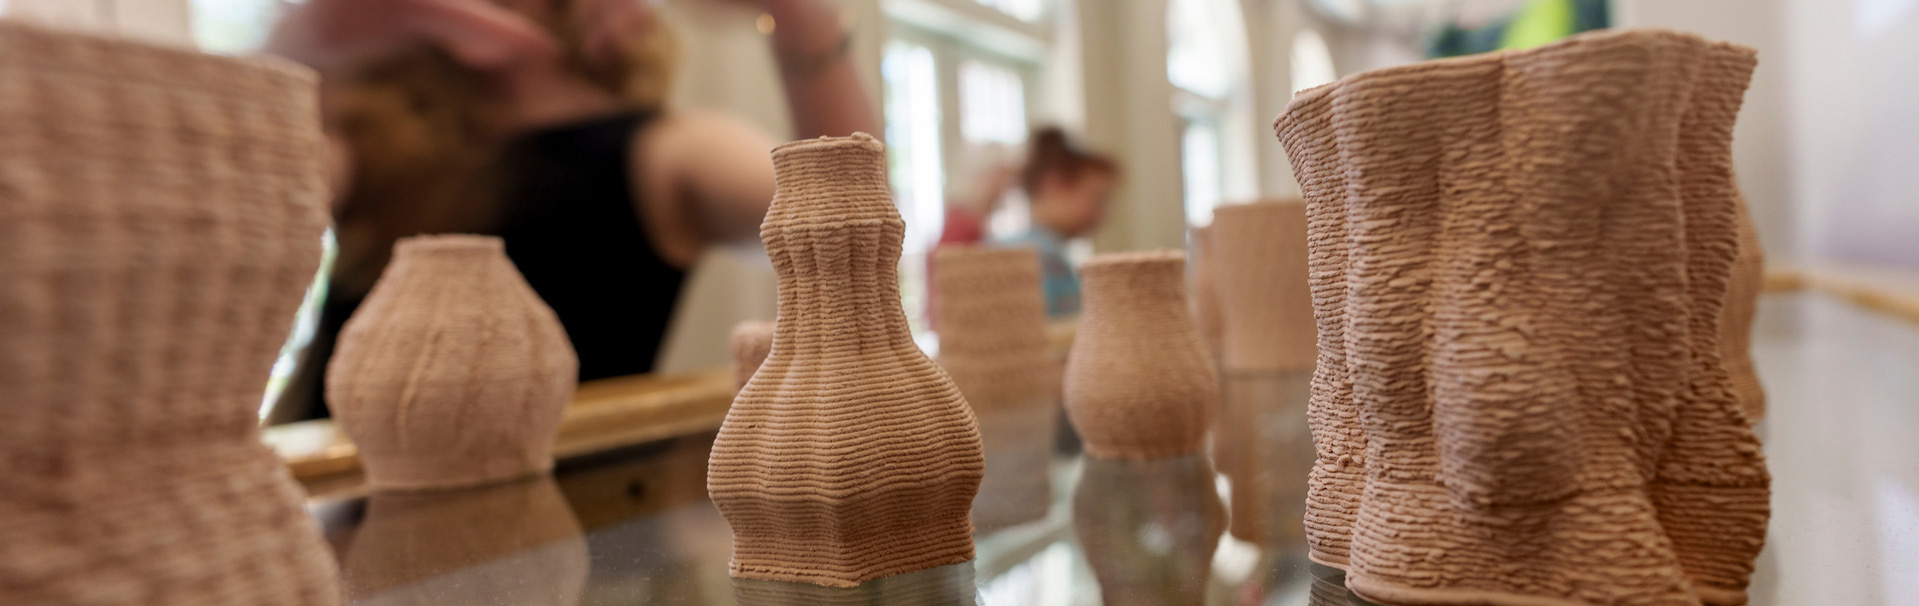 Ceramic 3D printed sculptures